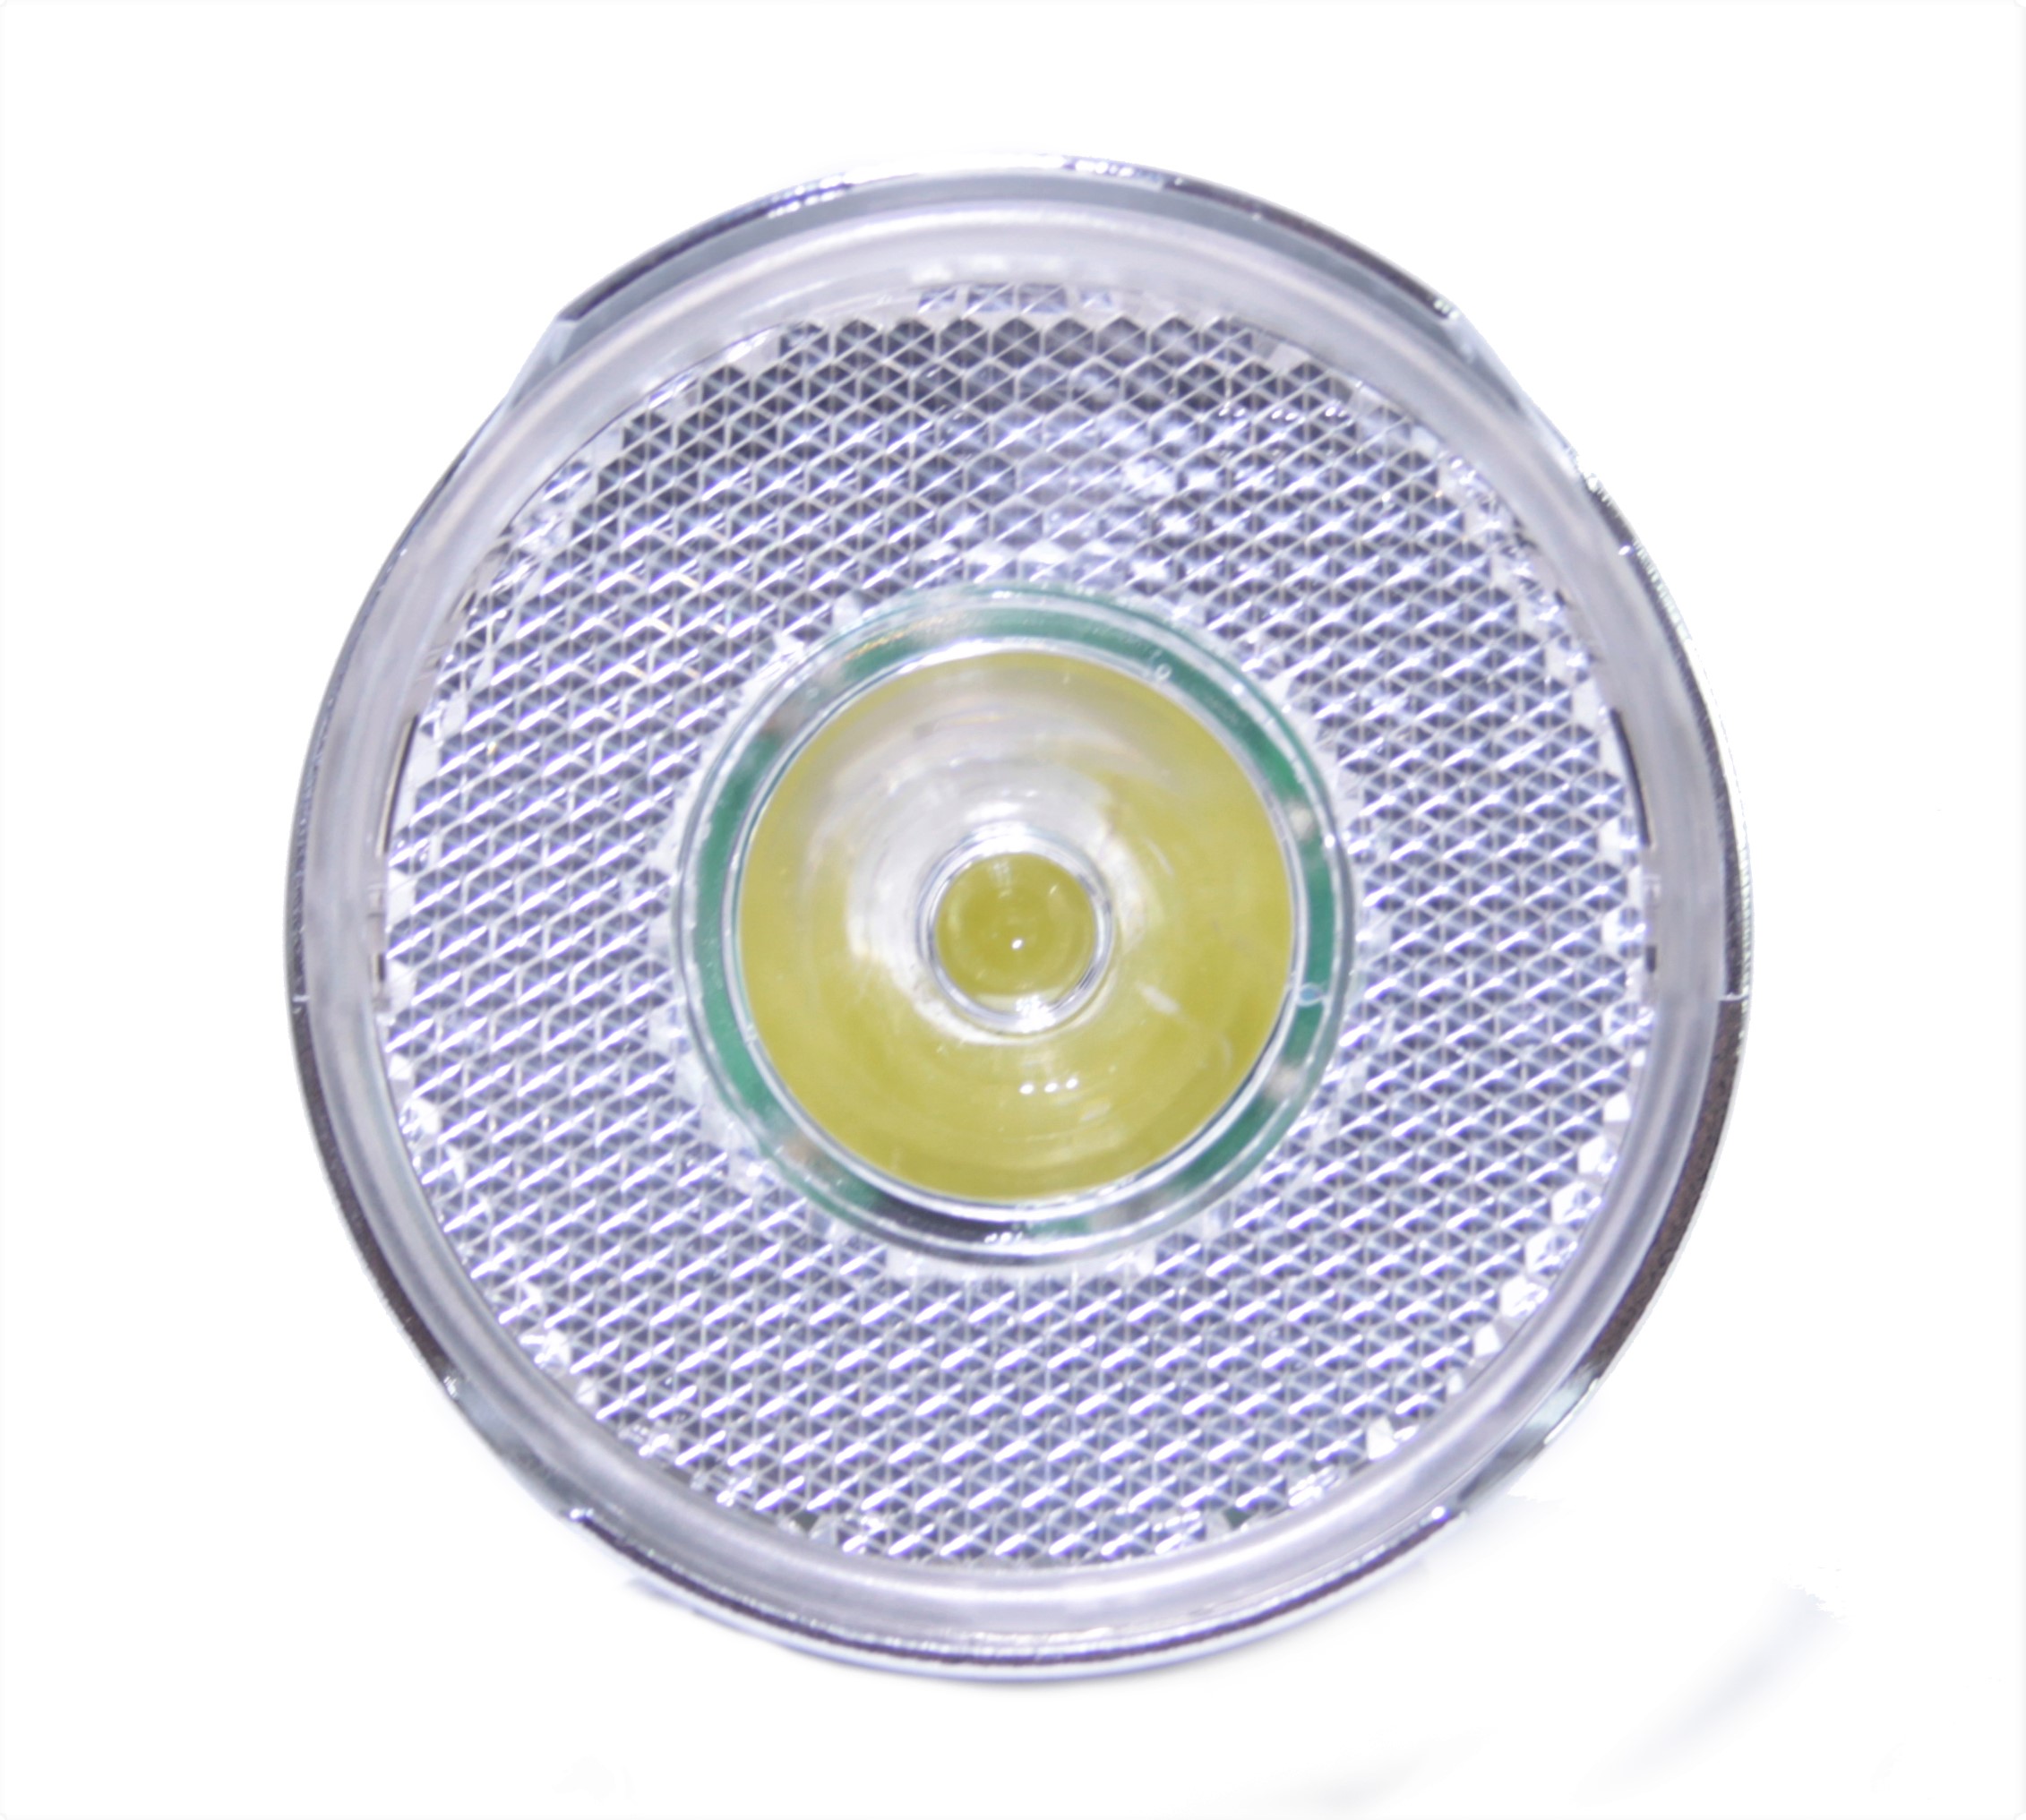 CC Retro LED Frontlampe Batterie 65 mm chrom mit Sonnenschute